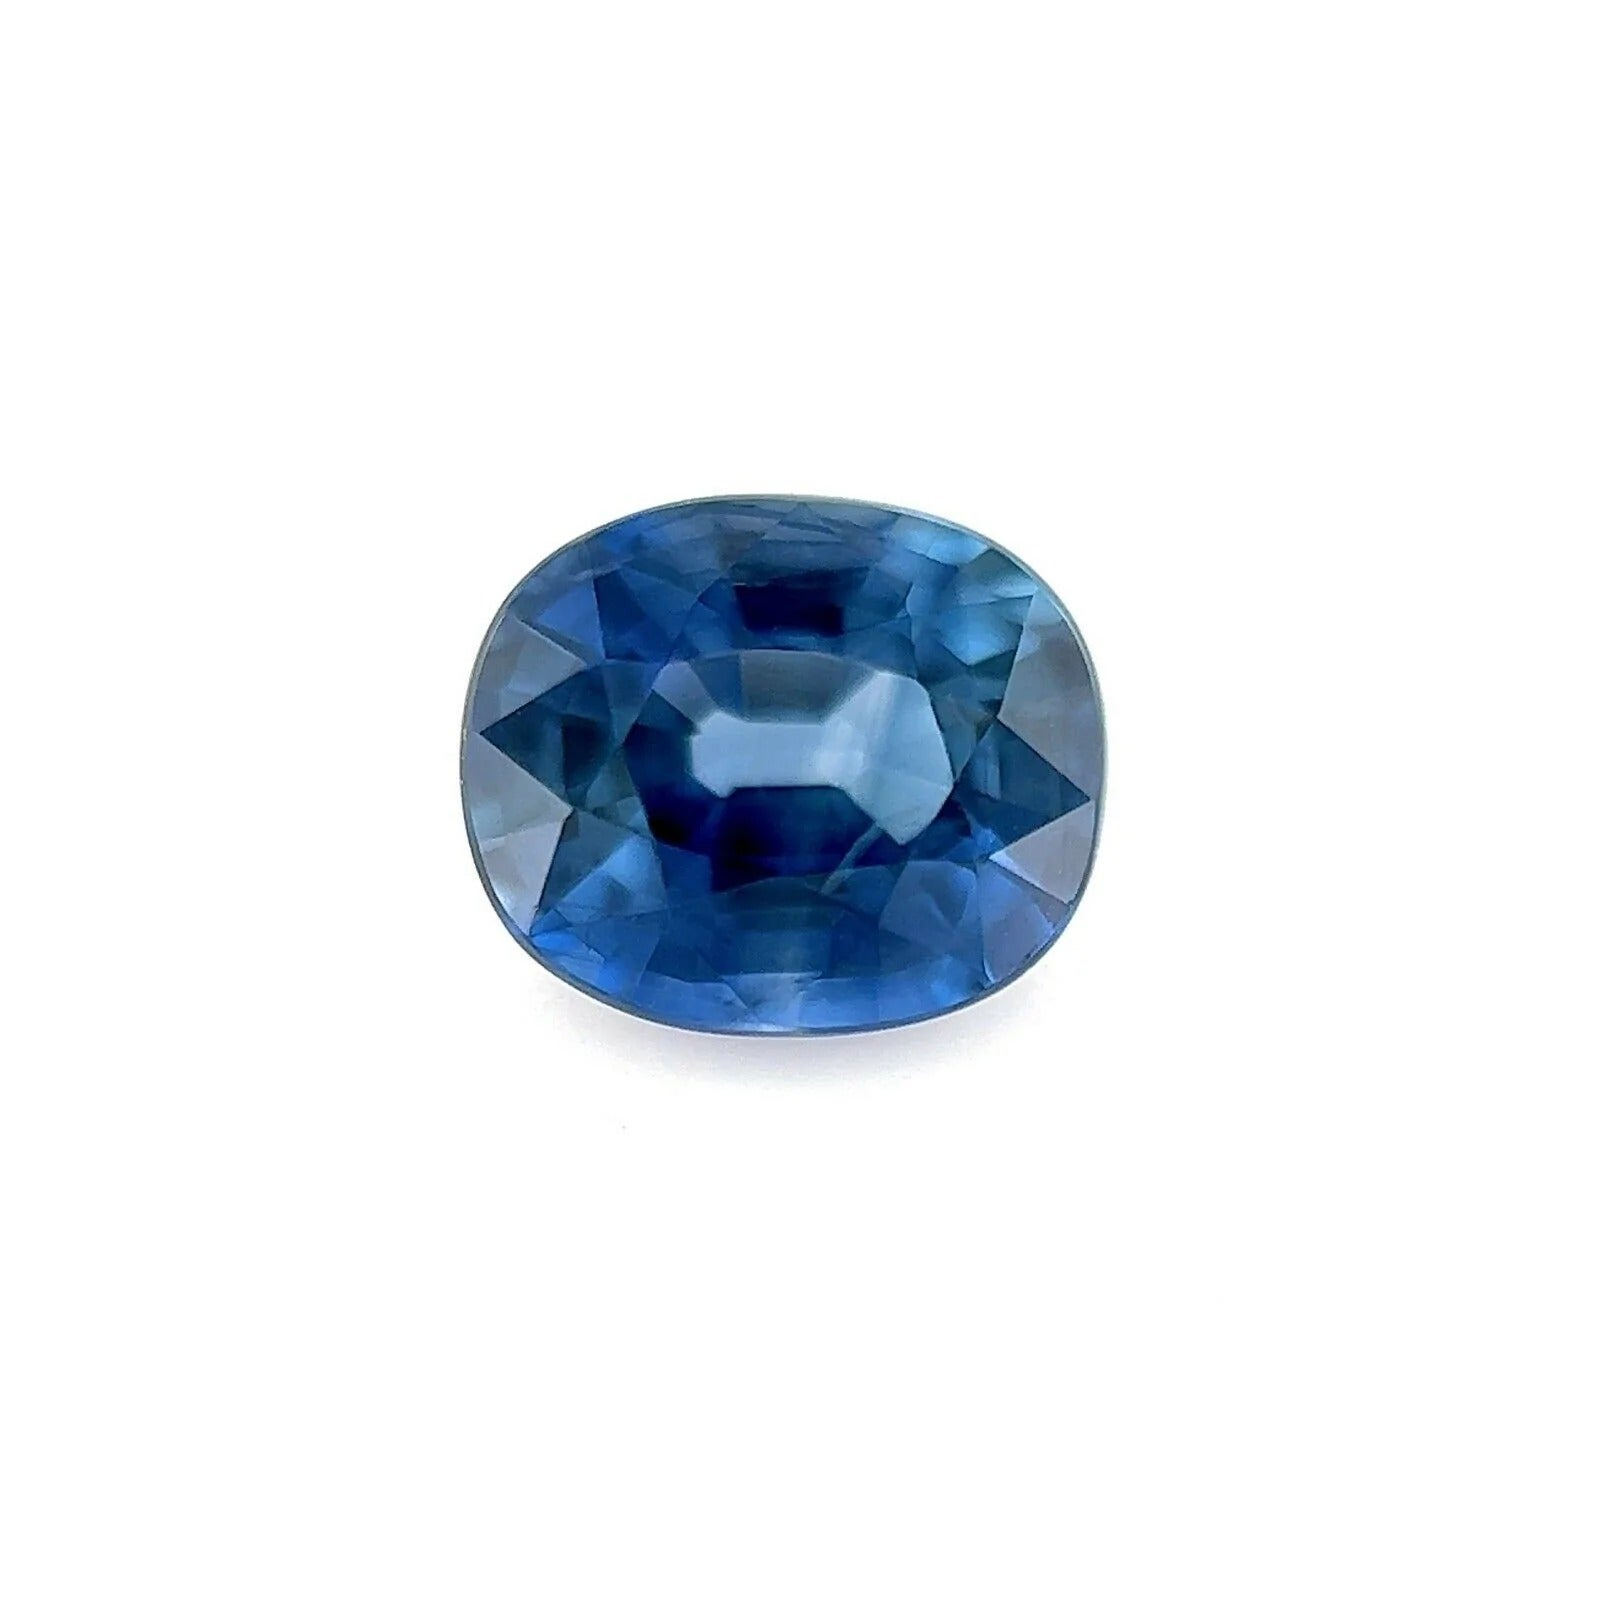 Fine Royal Blue Sapphire 0.68ct Cushion Cut Loose Rare Gem For Sale